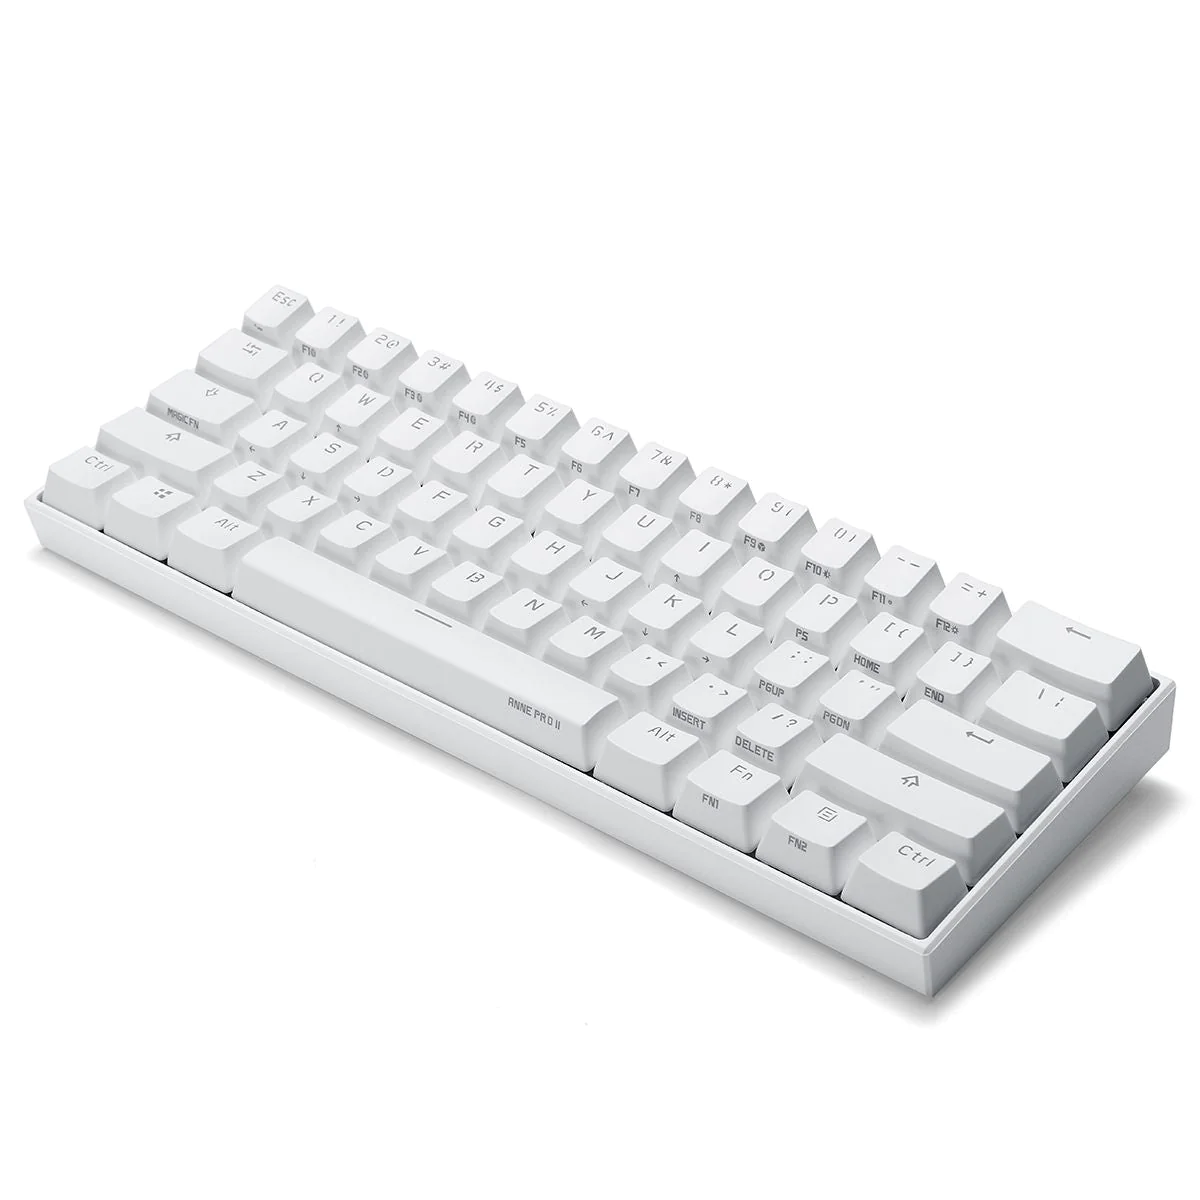 Anne Pro 2 60% Bluetooth Mechanical Keyboard White / Gateron Pro Brown